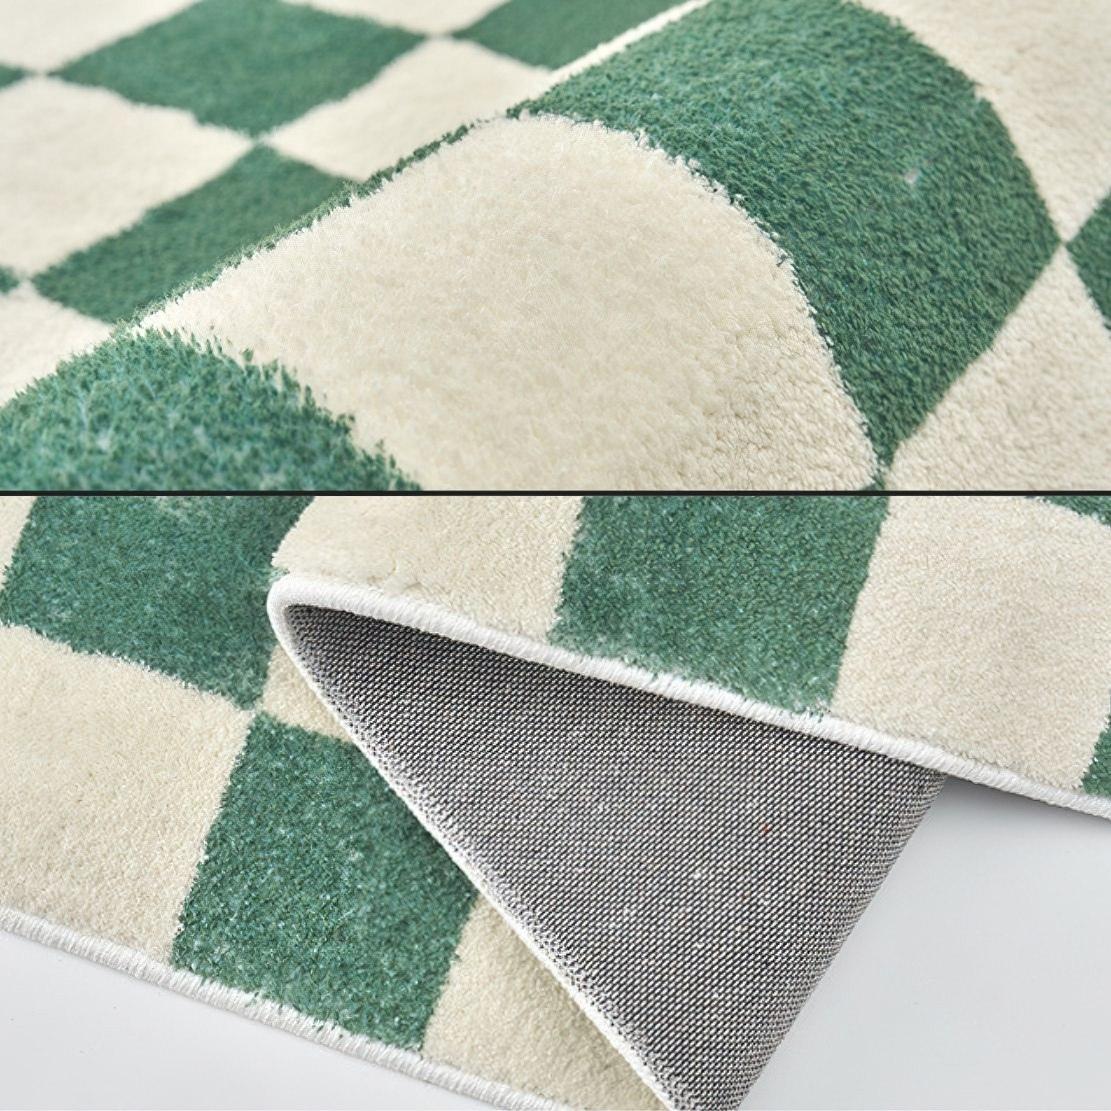 Green white checkered rug detail image